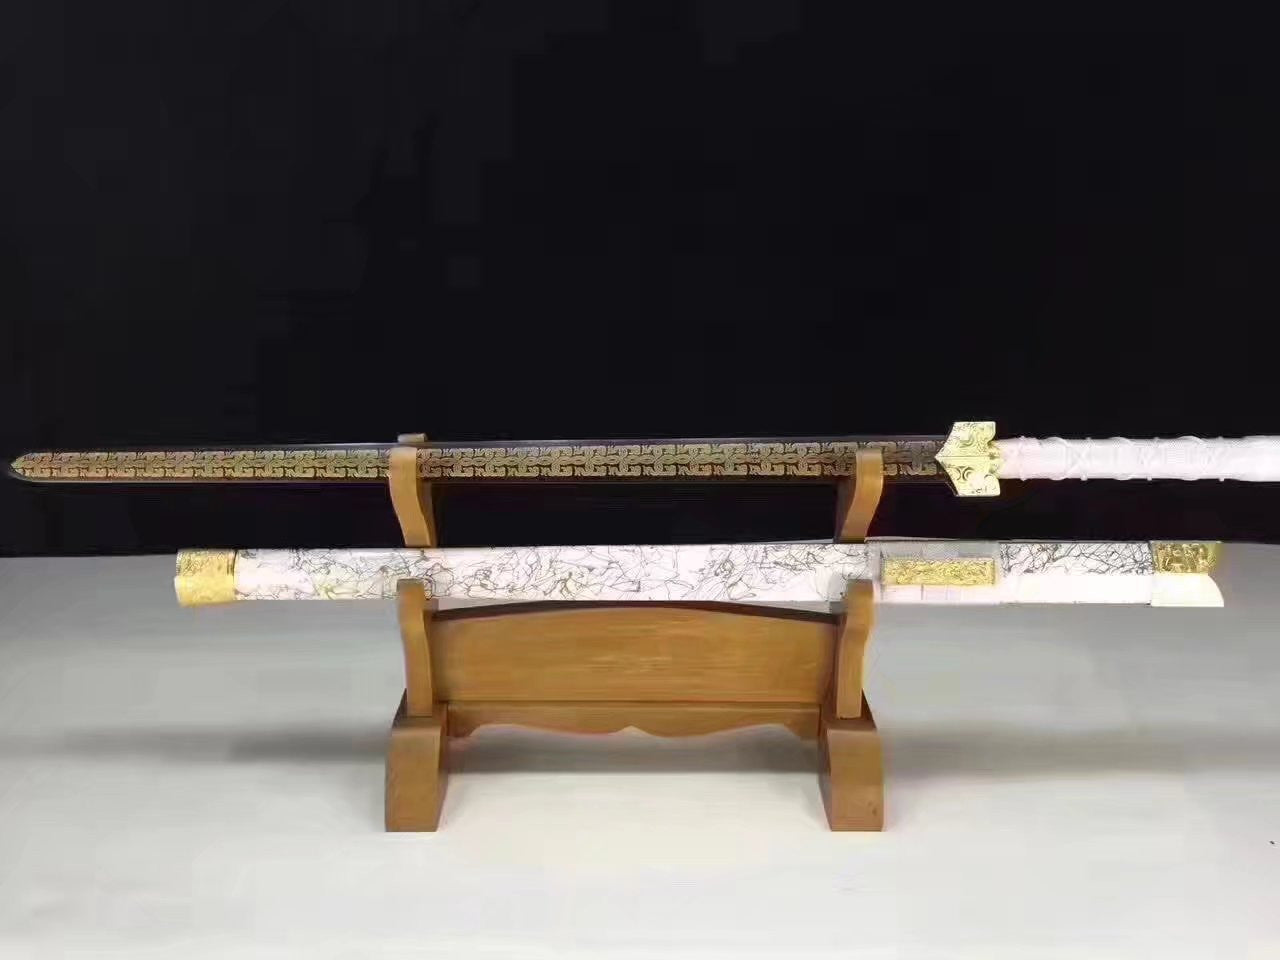 Han sword,Medium carbon steel etch blade,White scabbard,Alloy - Chinese sword shop